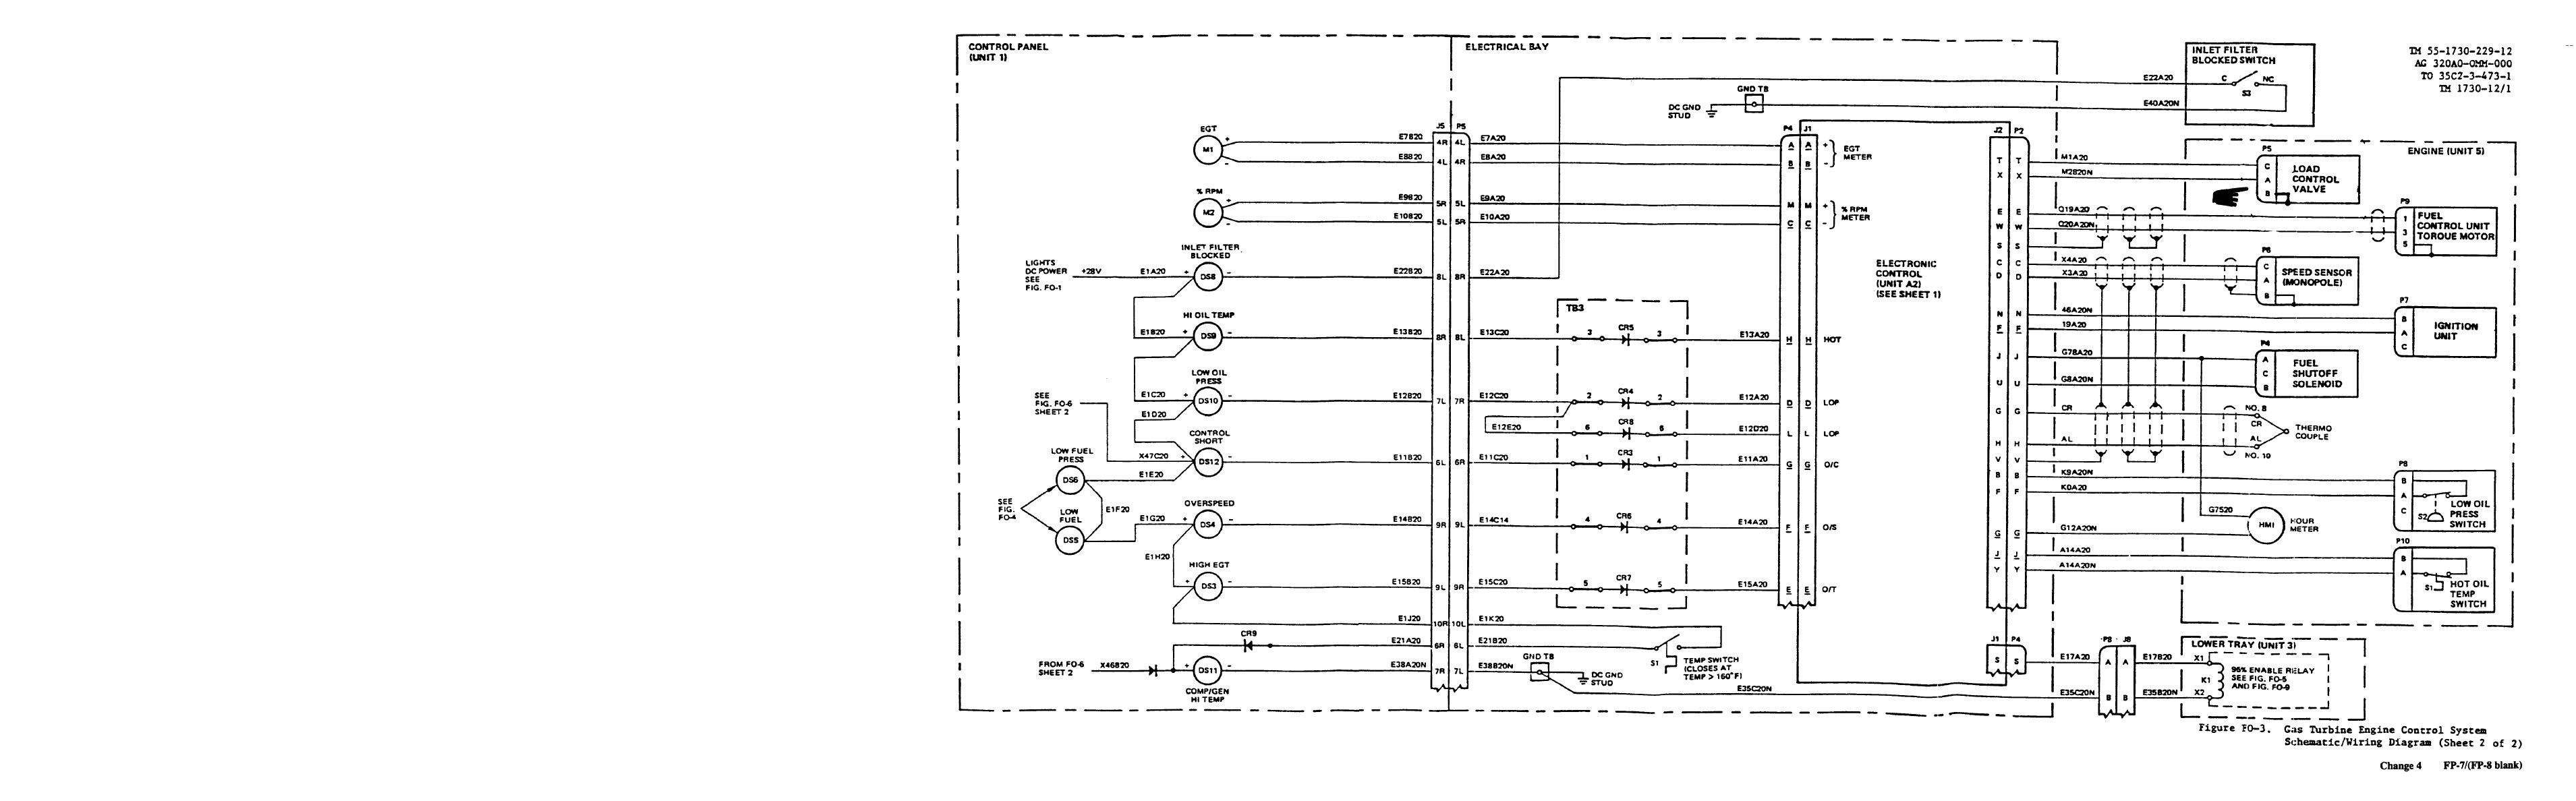 Turbine Engine Diagram Figure Fo 3 Gas Turbine Engine Control System Schematic Wiring Of Turbine Engine Diagram